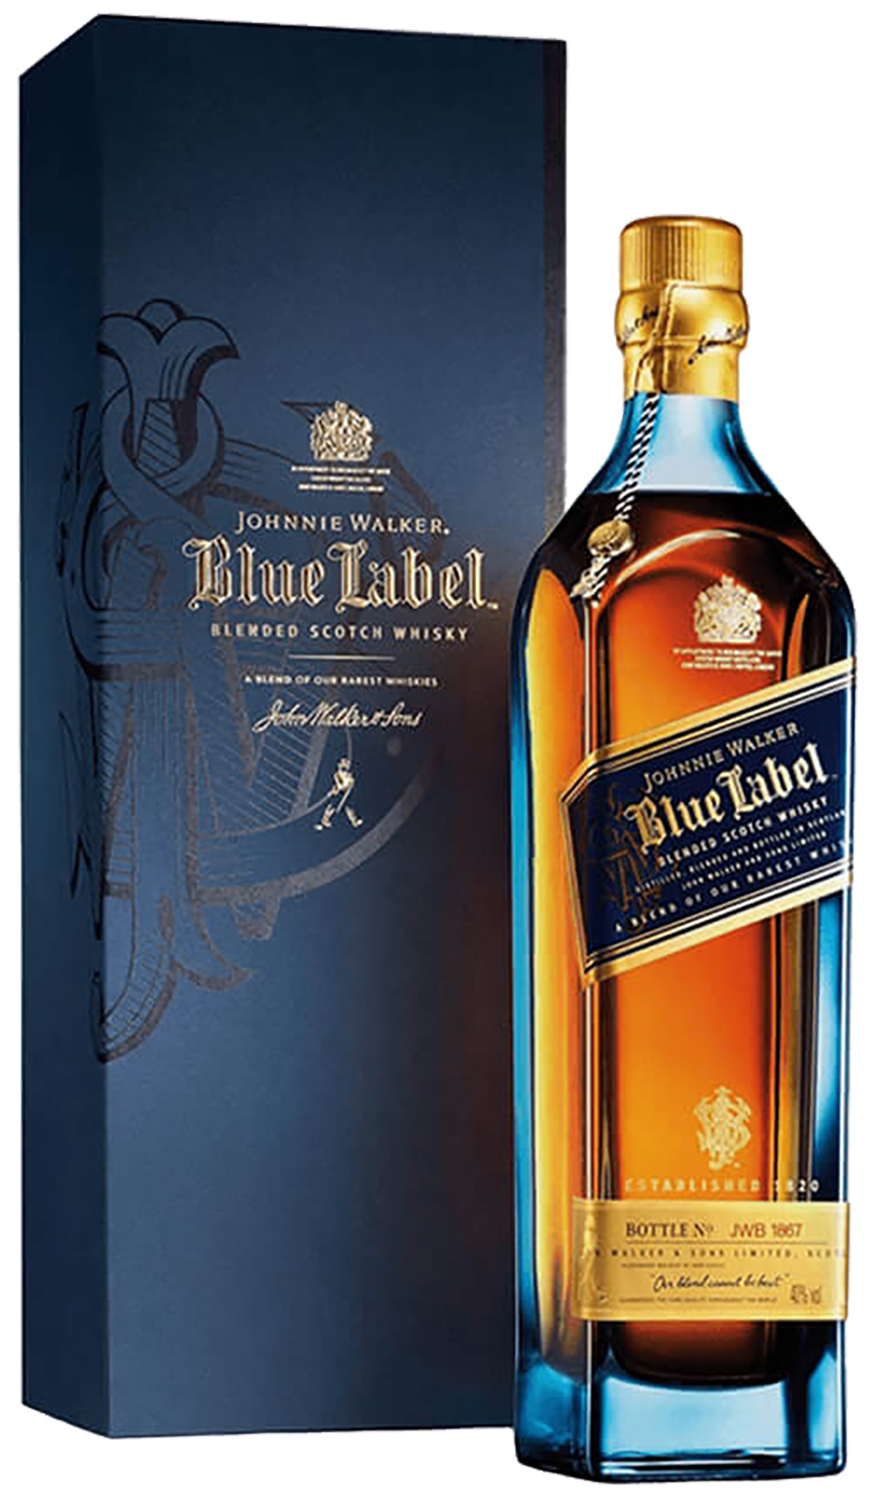 Johnnie Walker Blue Label Blended Scotch Whisky (gift box)